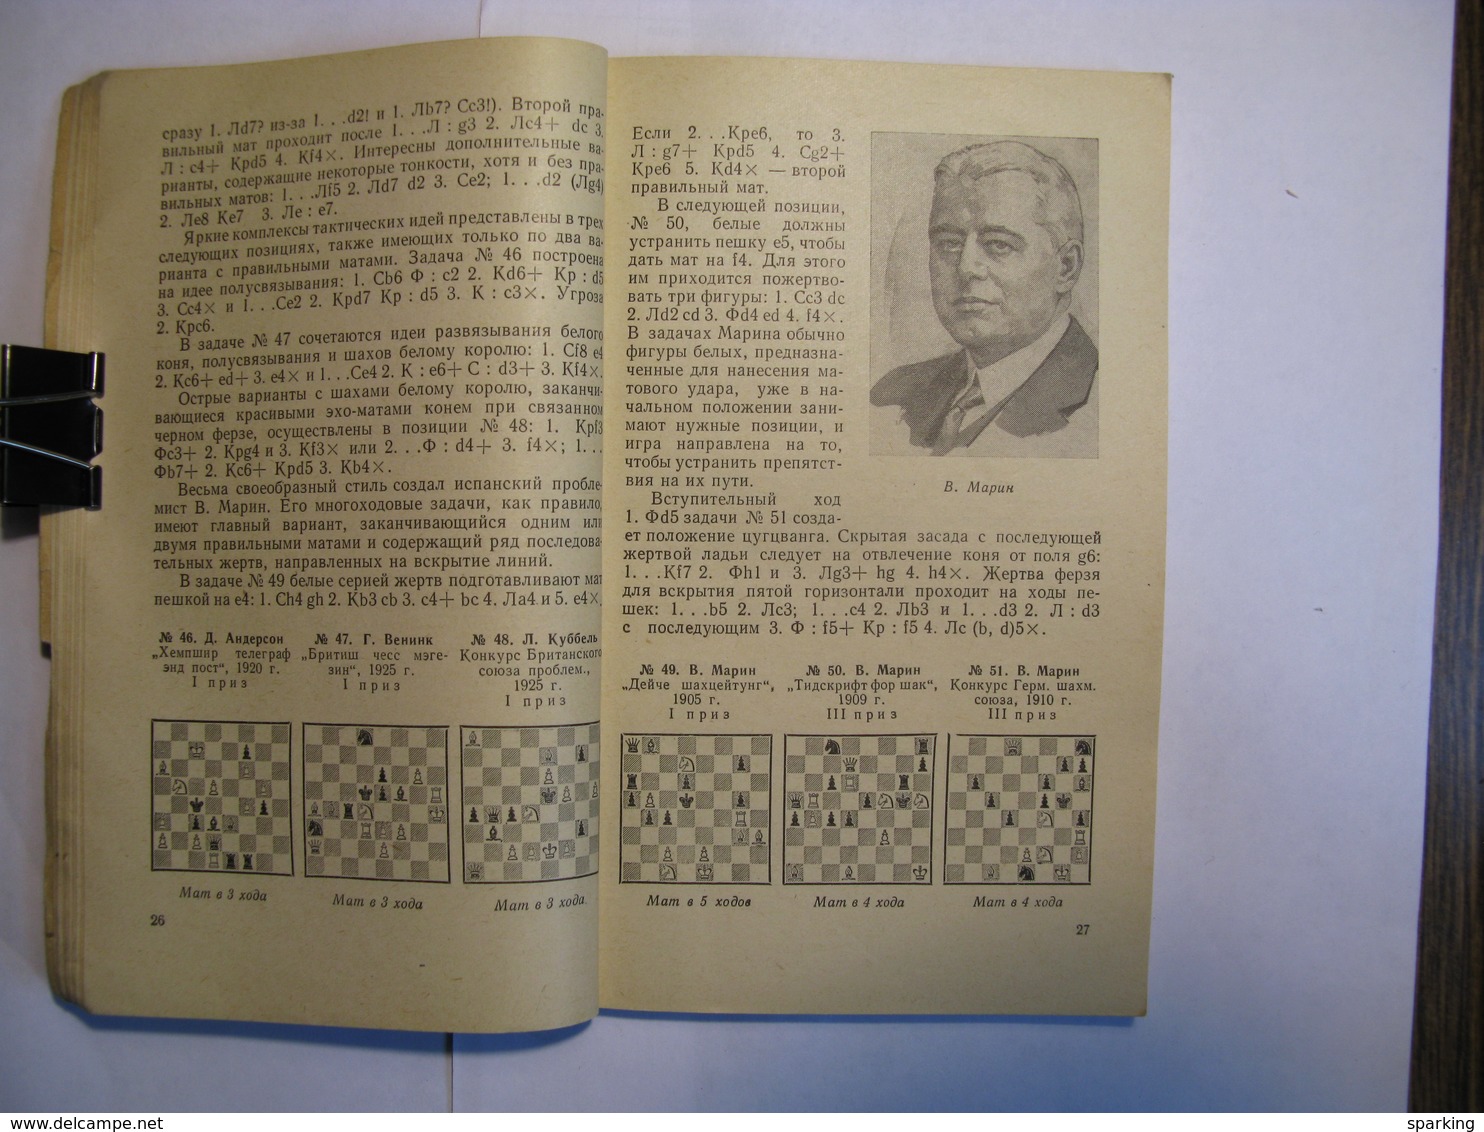 Umnov Chess task of the XX century. 1901-1944.